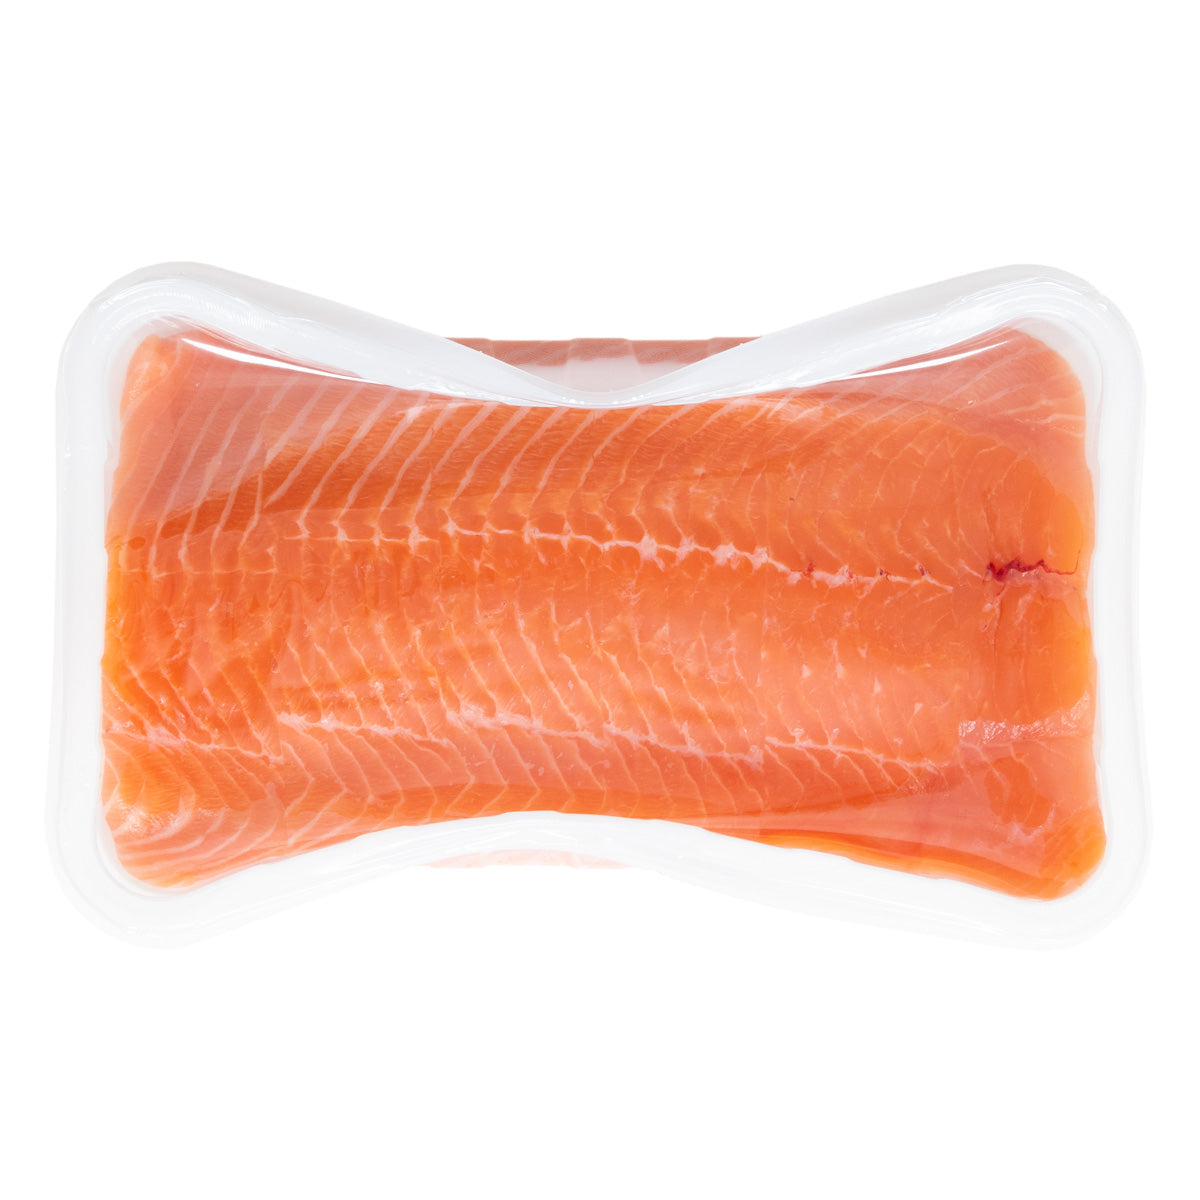 Pierless Fish Farm Raised PBO Scottish Salmon Portion 6 OZ